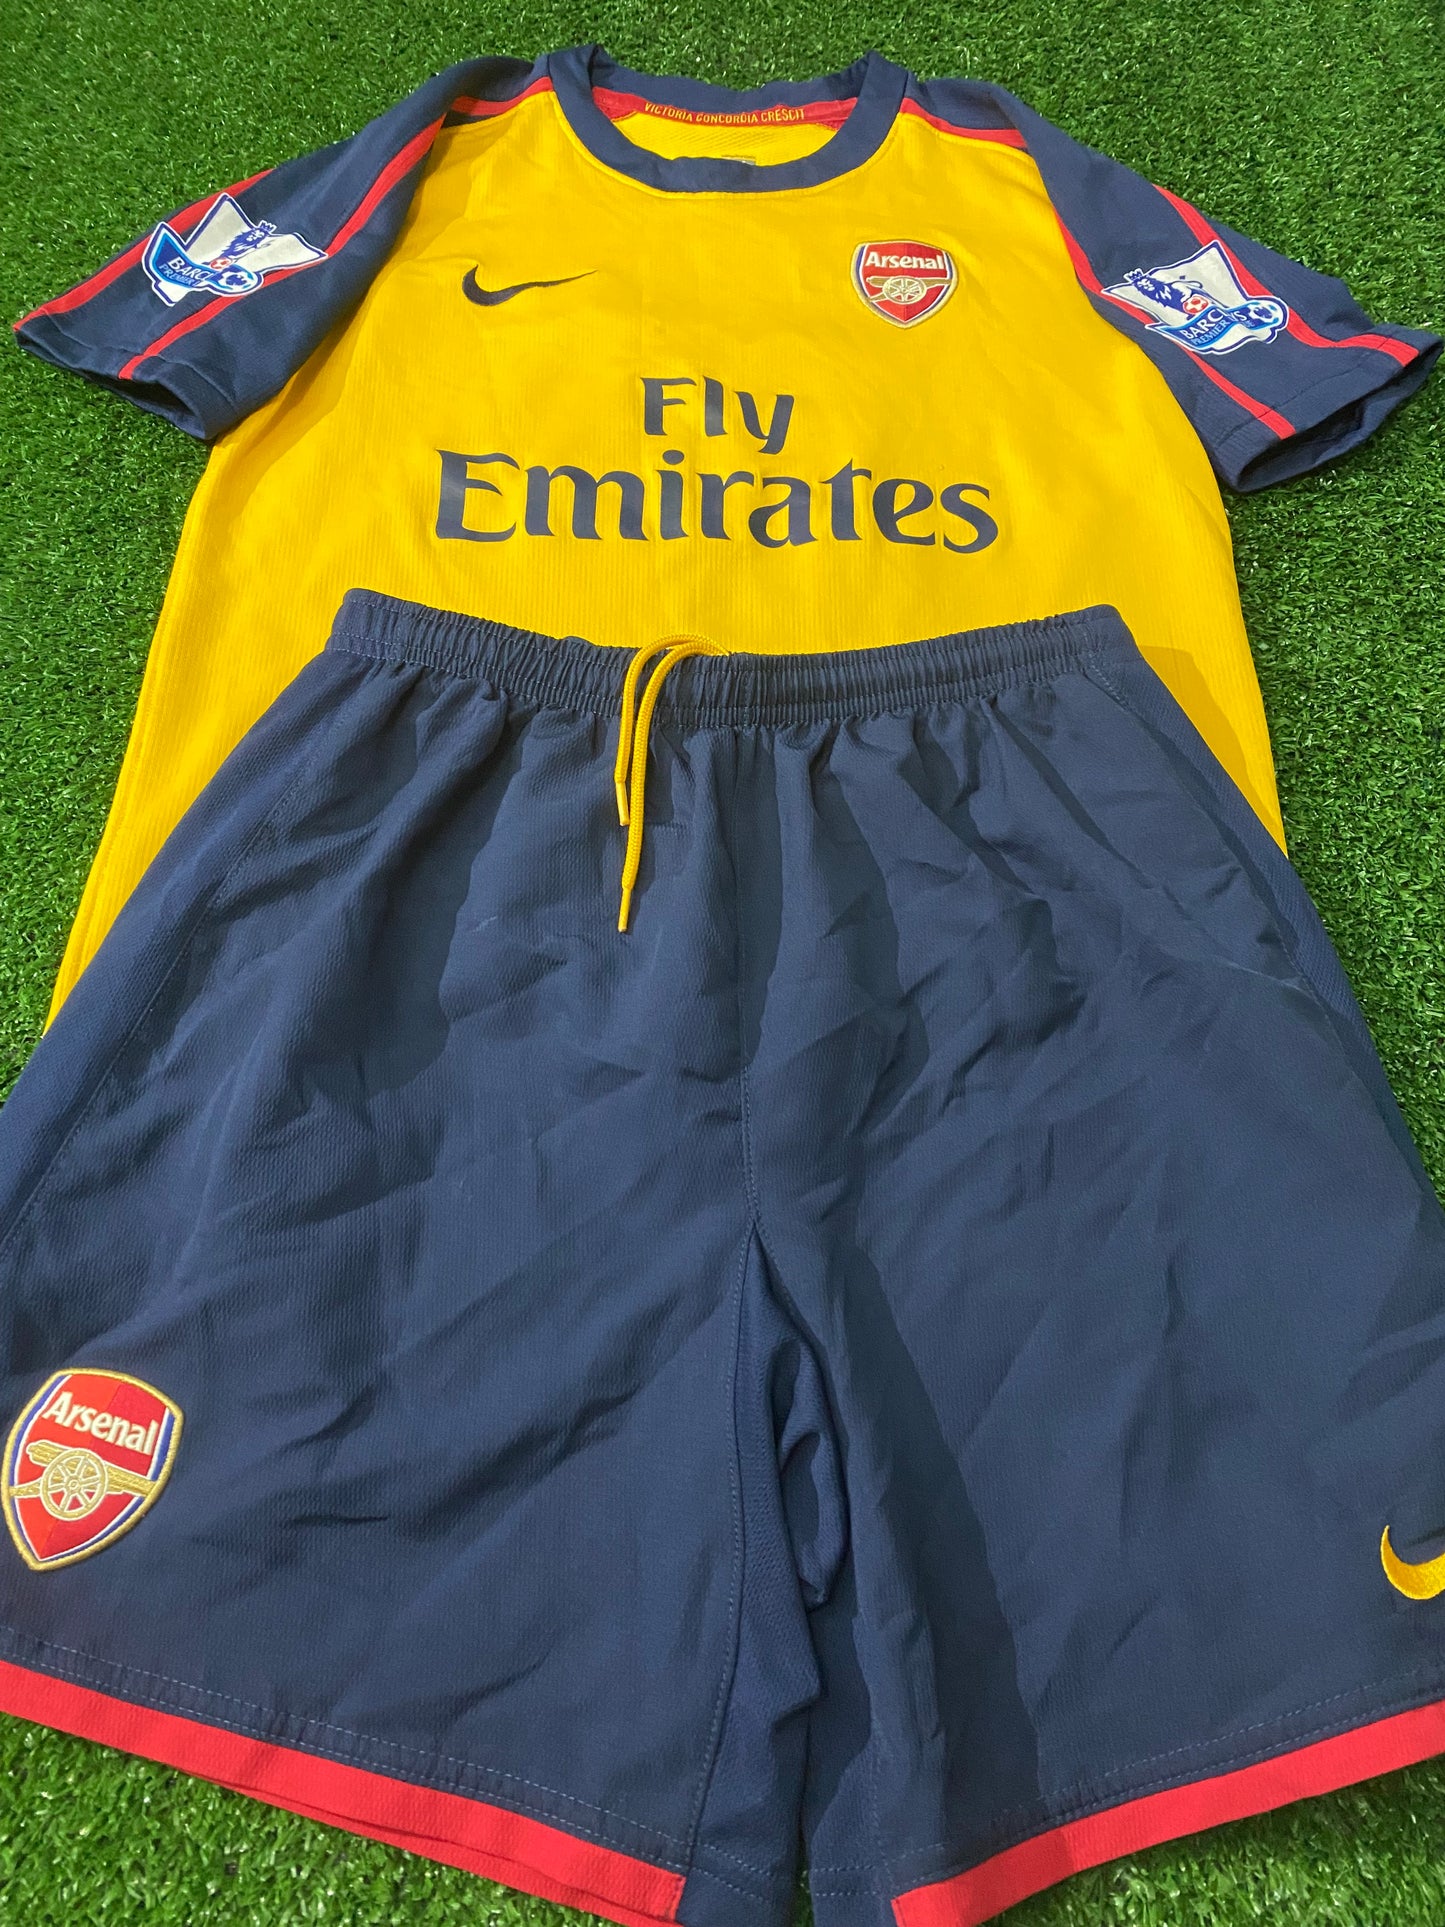 Arsenal FC Football Large Boys 10-12 Year Old Nike Made V Persie no11 Top & Shorts Set